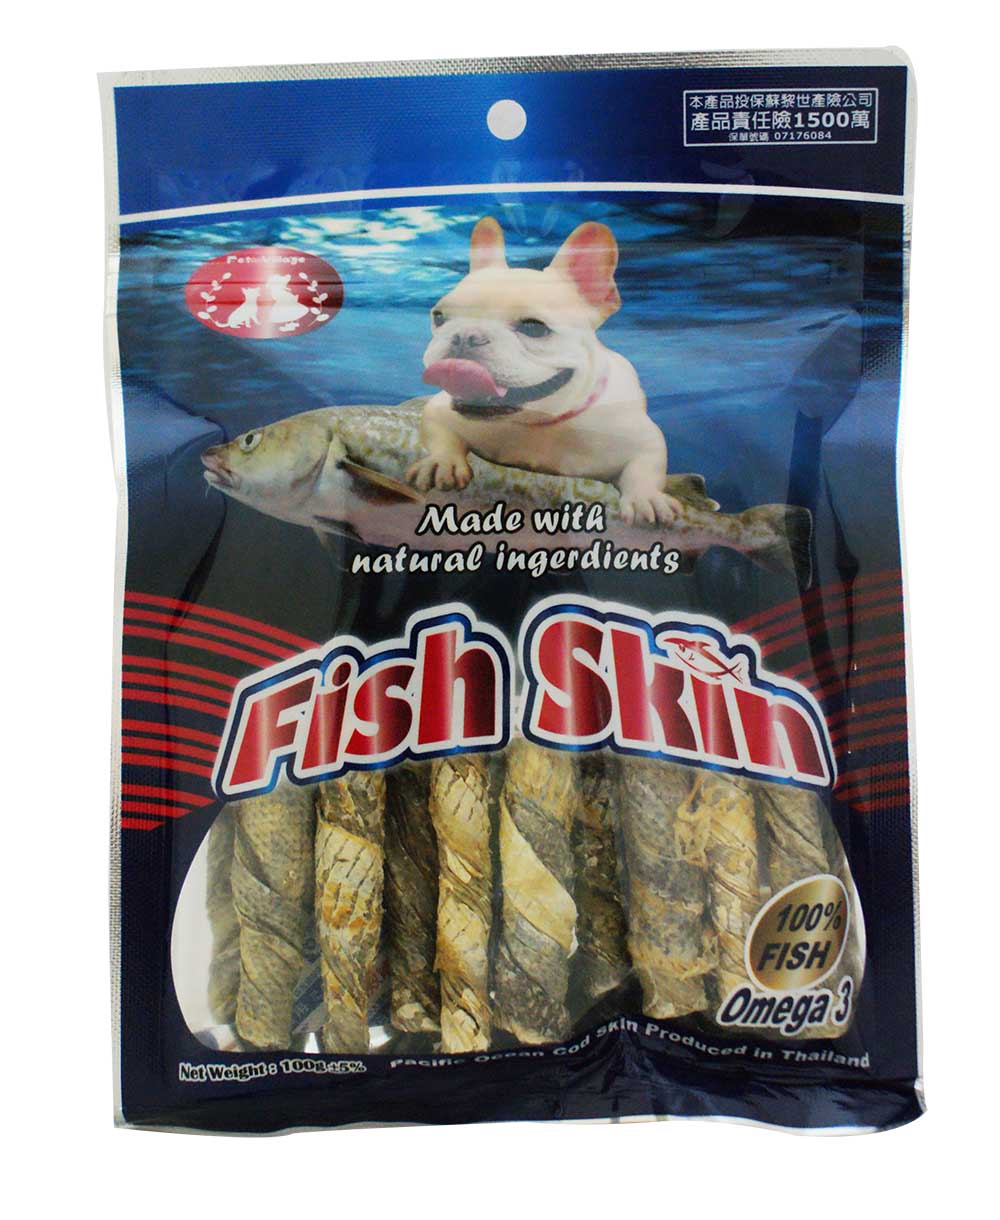 PV鱈魚細棒-原味
Dog Treat - Cod Skin Thin Stick Original